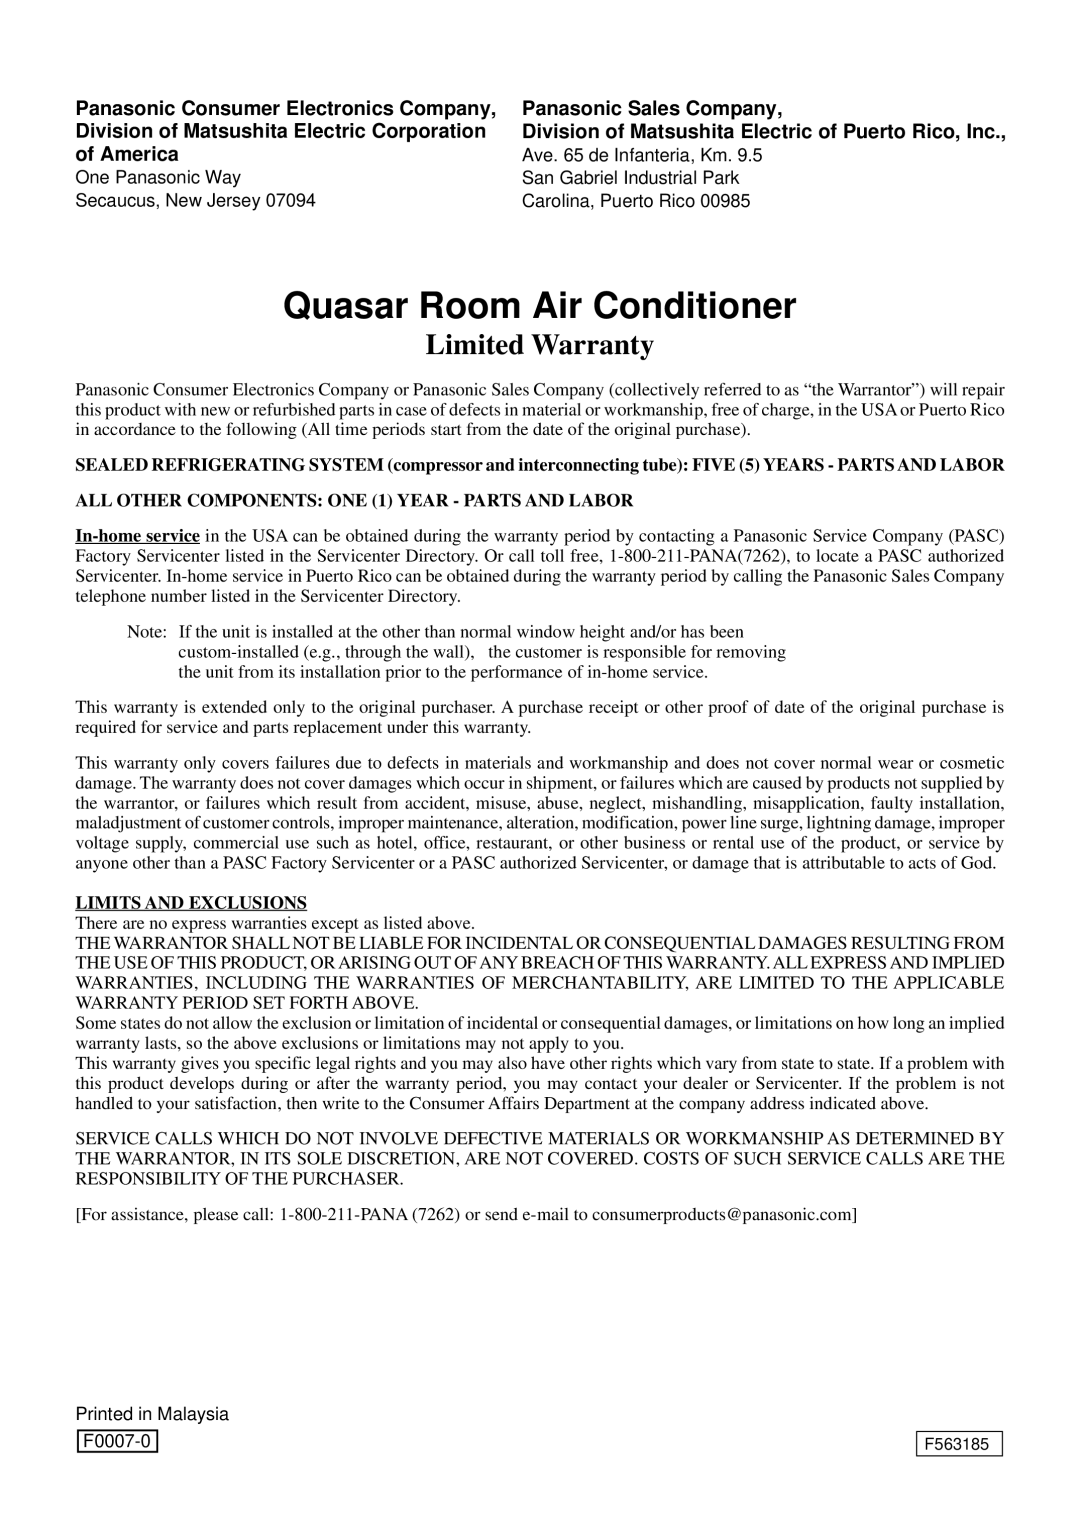 Quasar HQ-2101RH manual Quasar Room Air Conditioner, Limited Warranty, Panasonic Consumer Electronics Company, of America 